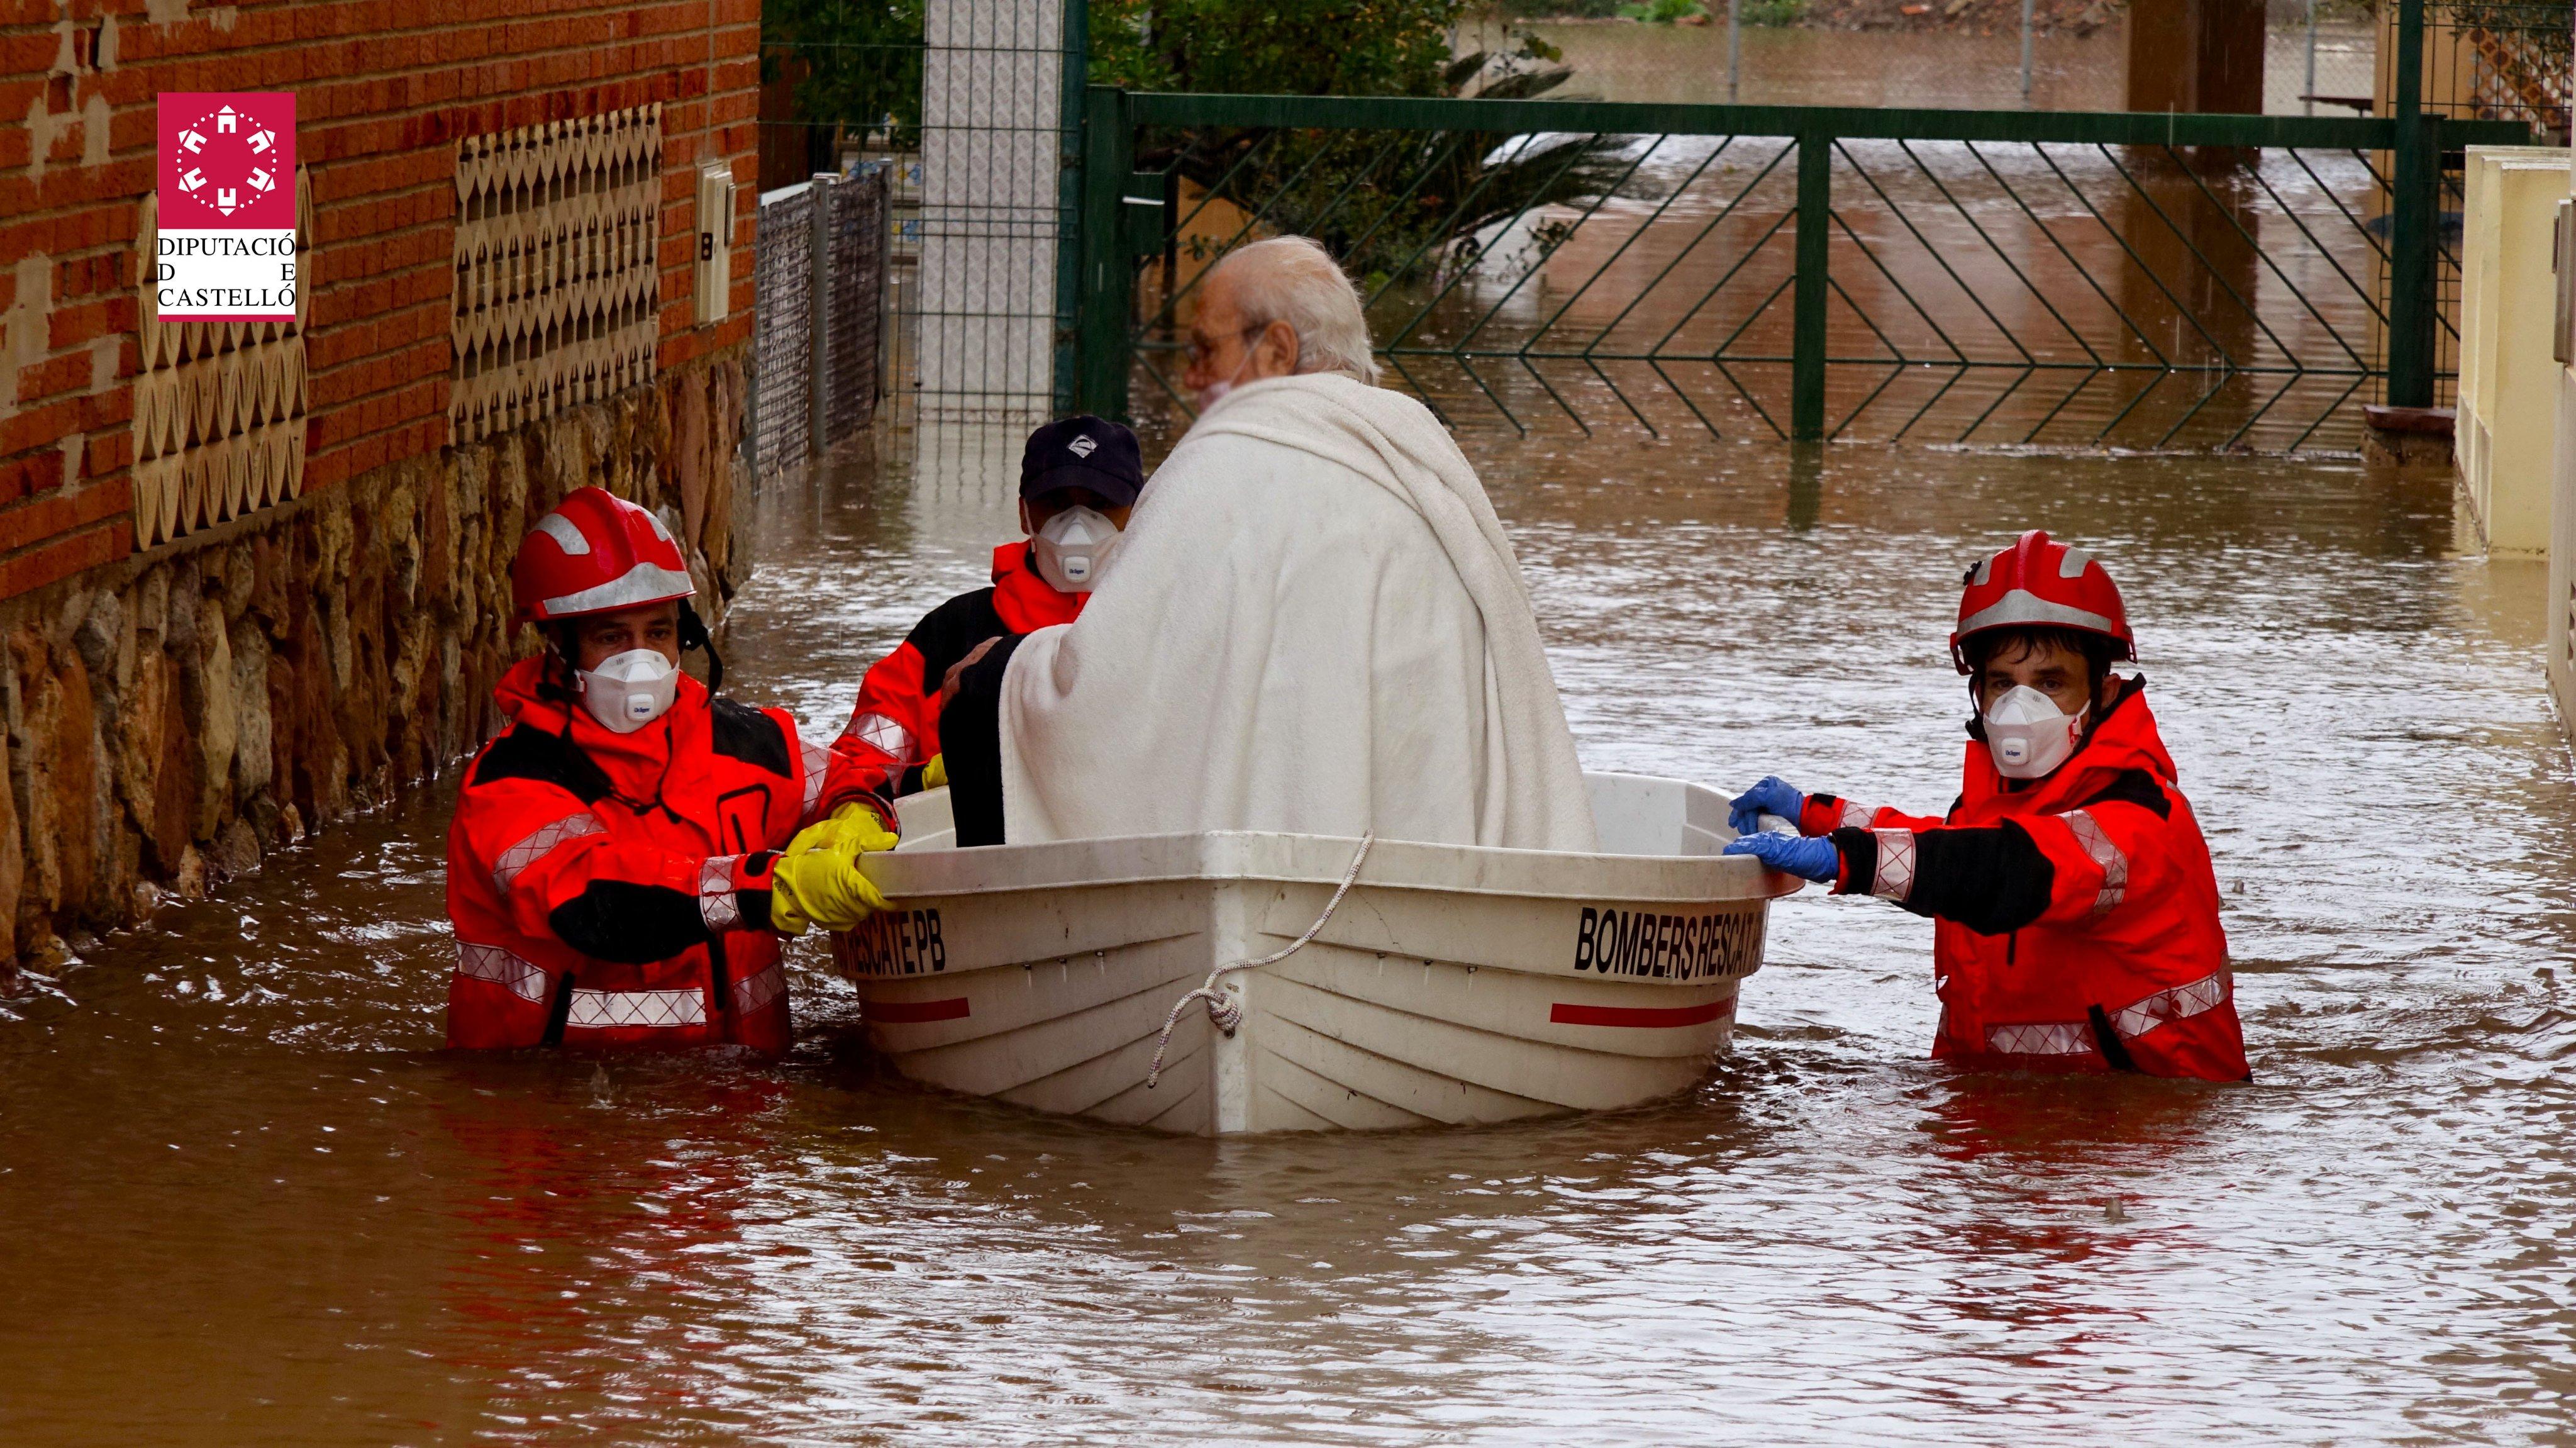 Rescue of man in Castellón, Spain during early April flooding. Credit: Diputació de Castelló